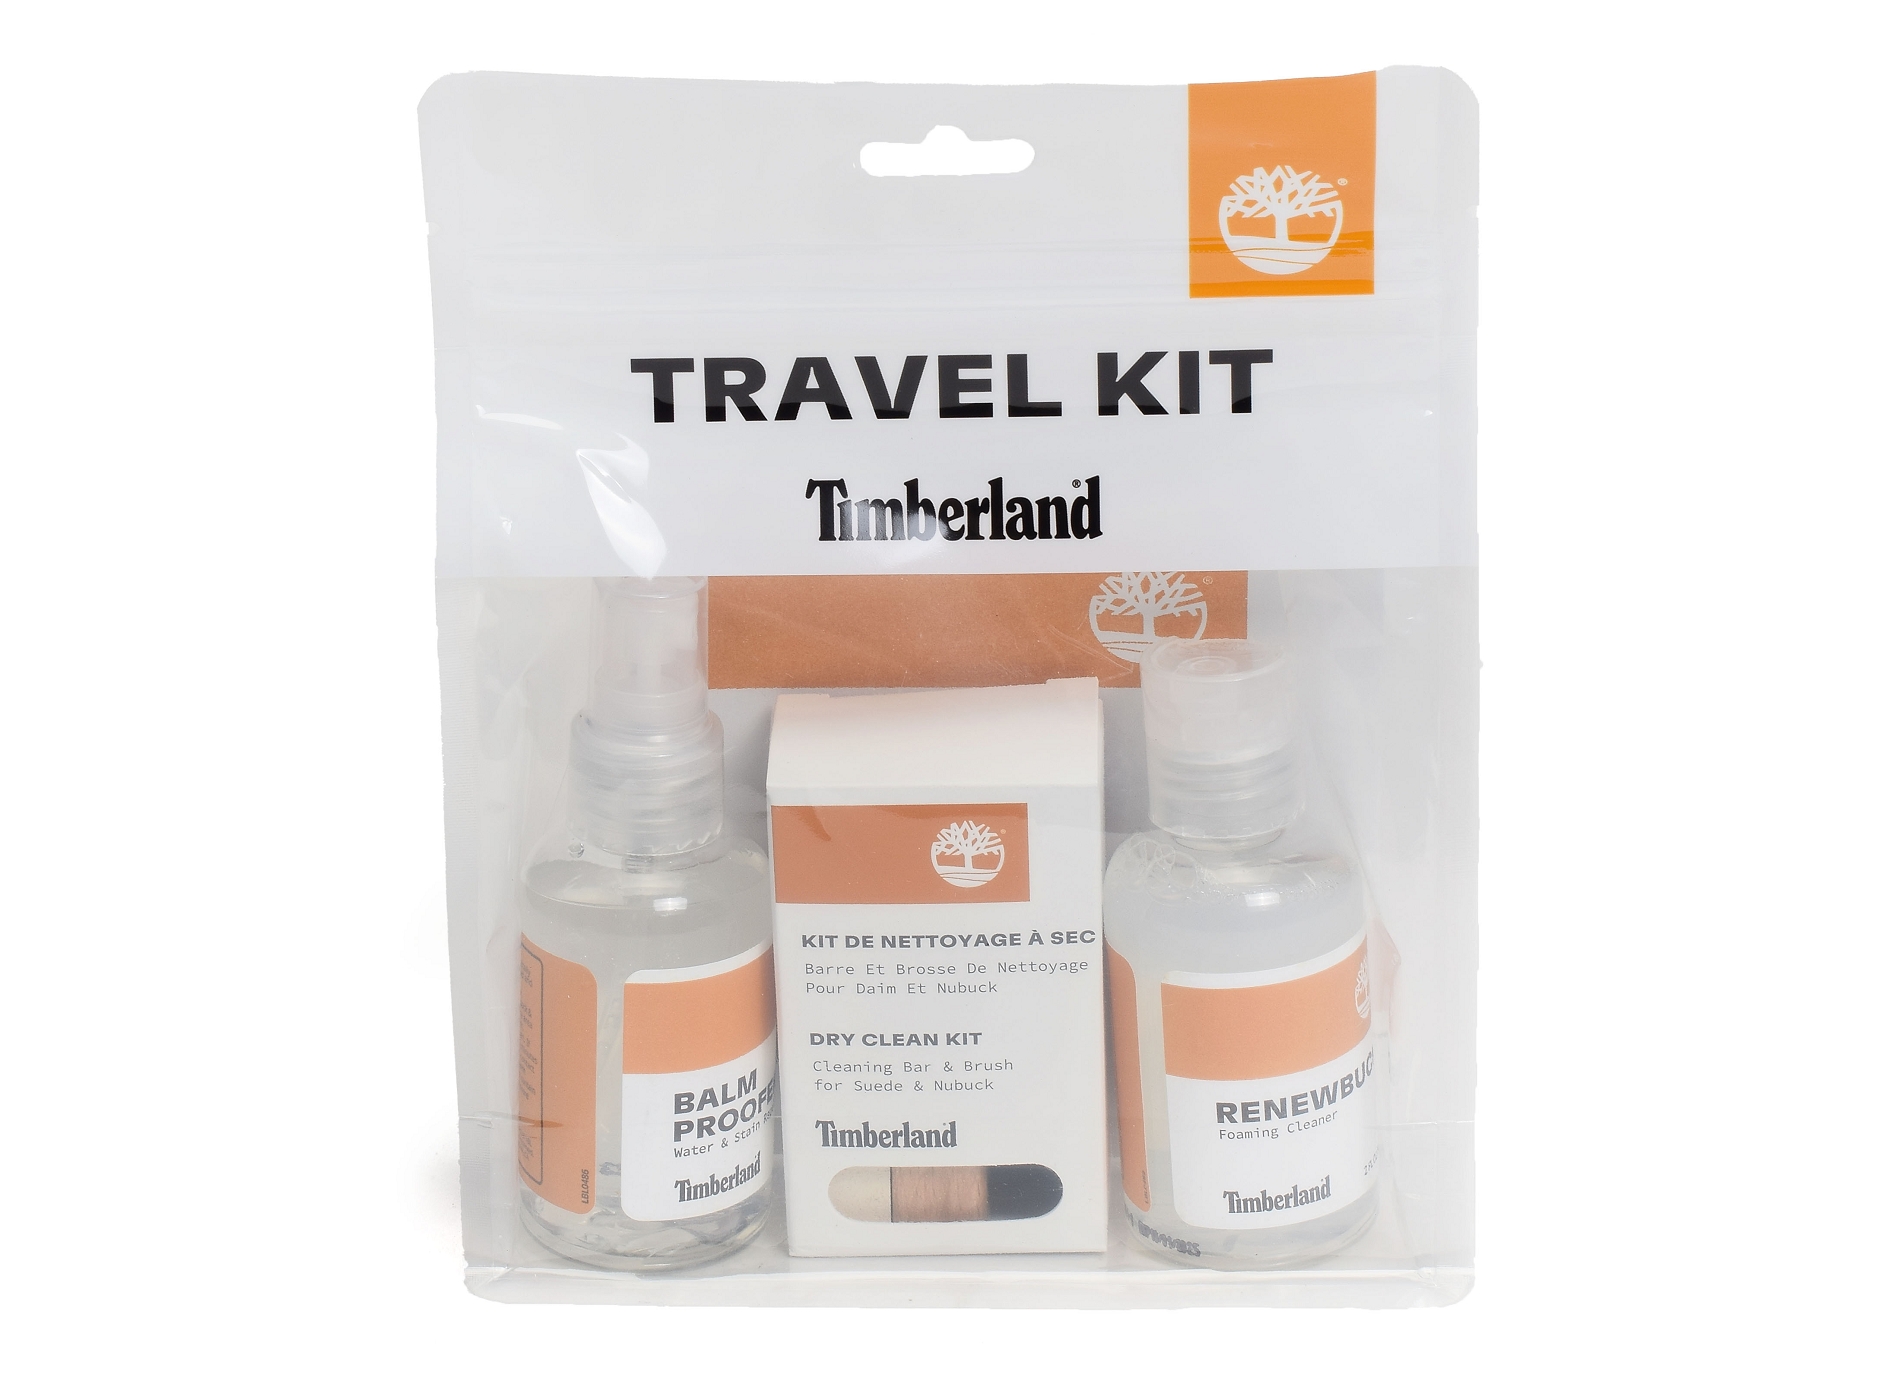 entretien Timberland Travel kit timberland